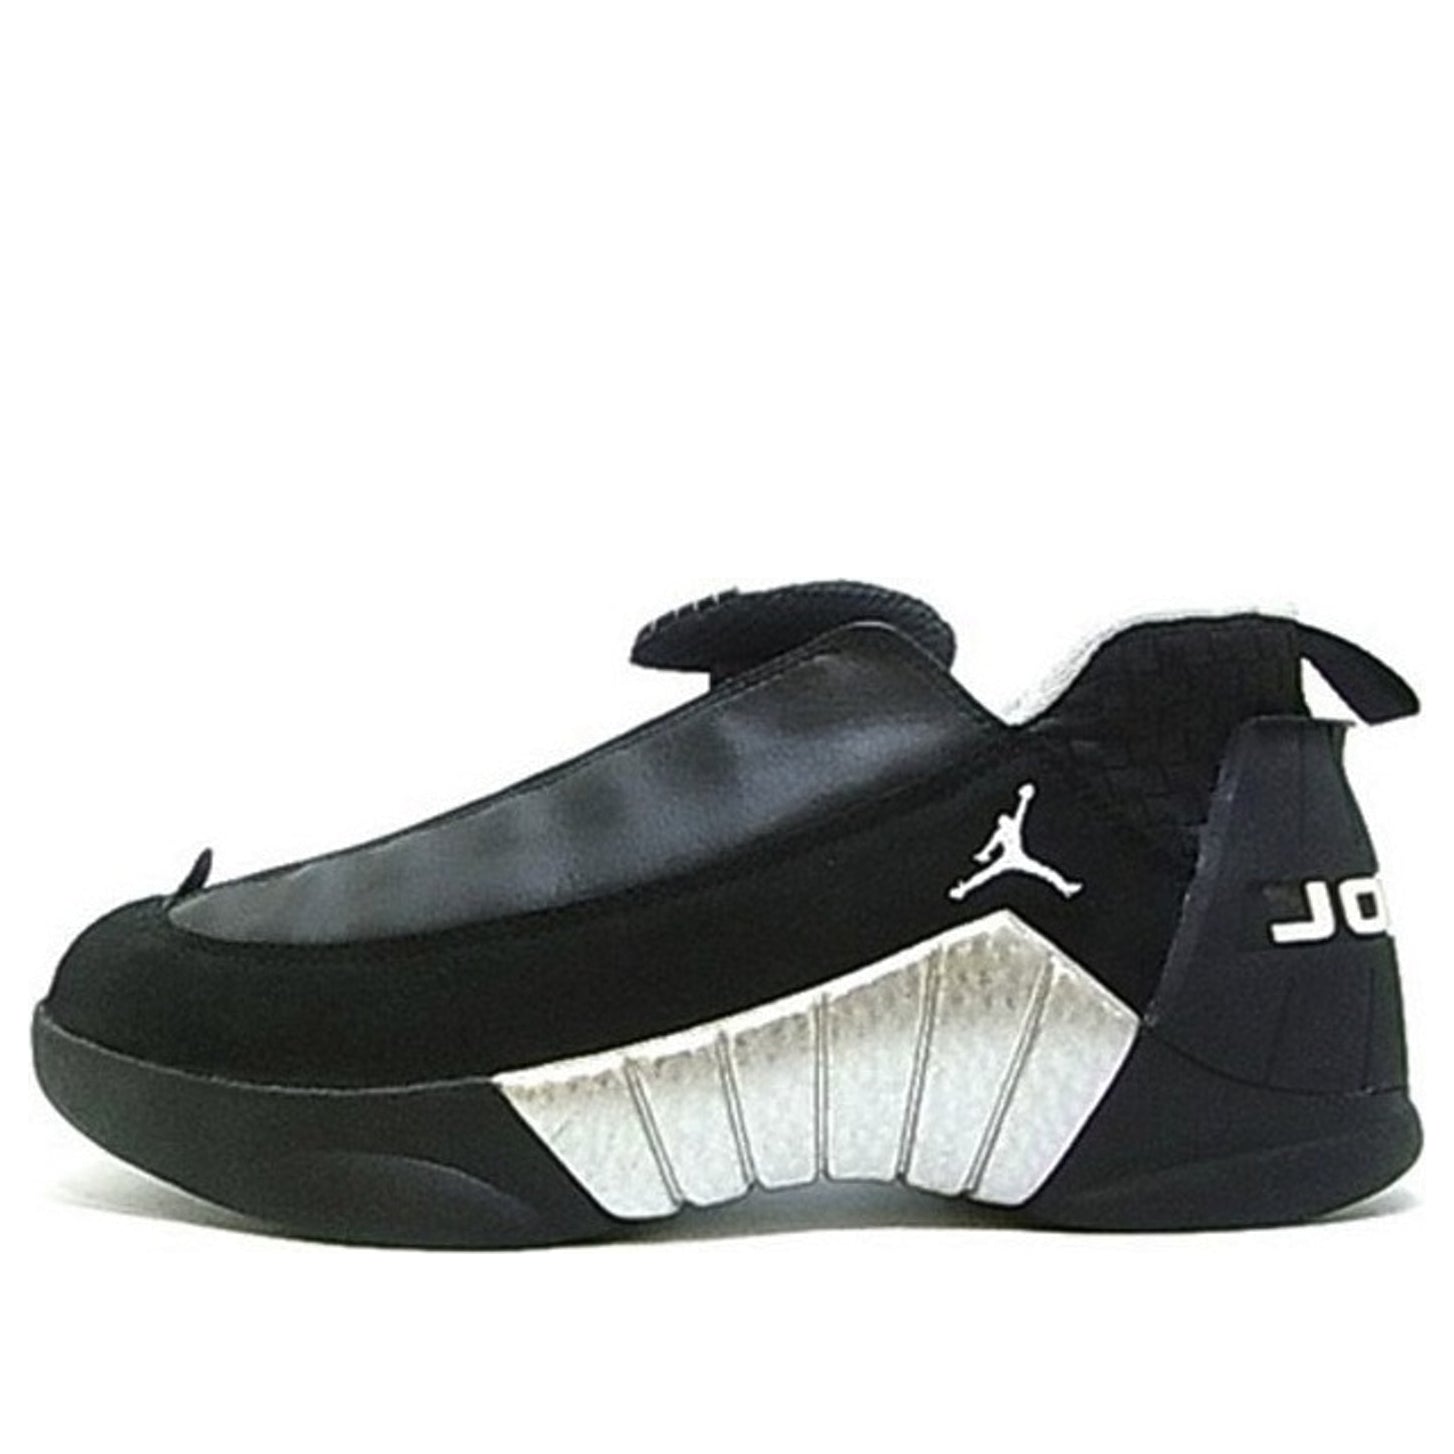 Air Jordan 15 OG Low 'Black Silver' 136035-011 Signature Shoe - Click Image to Close